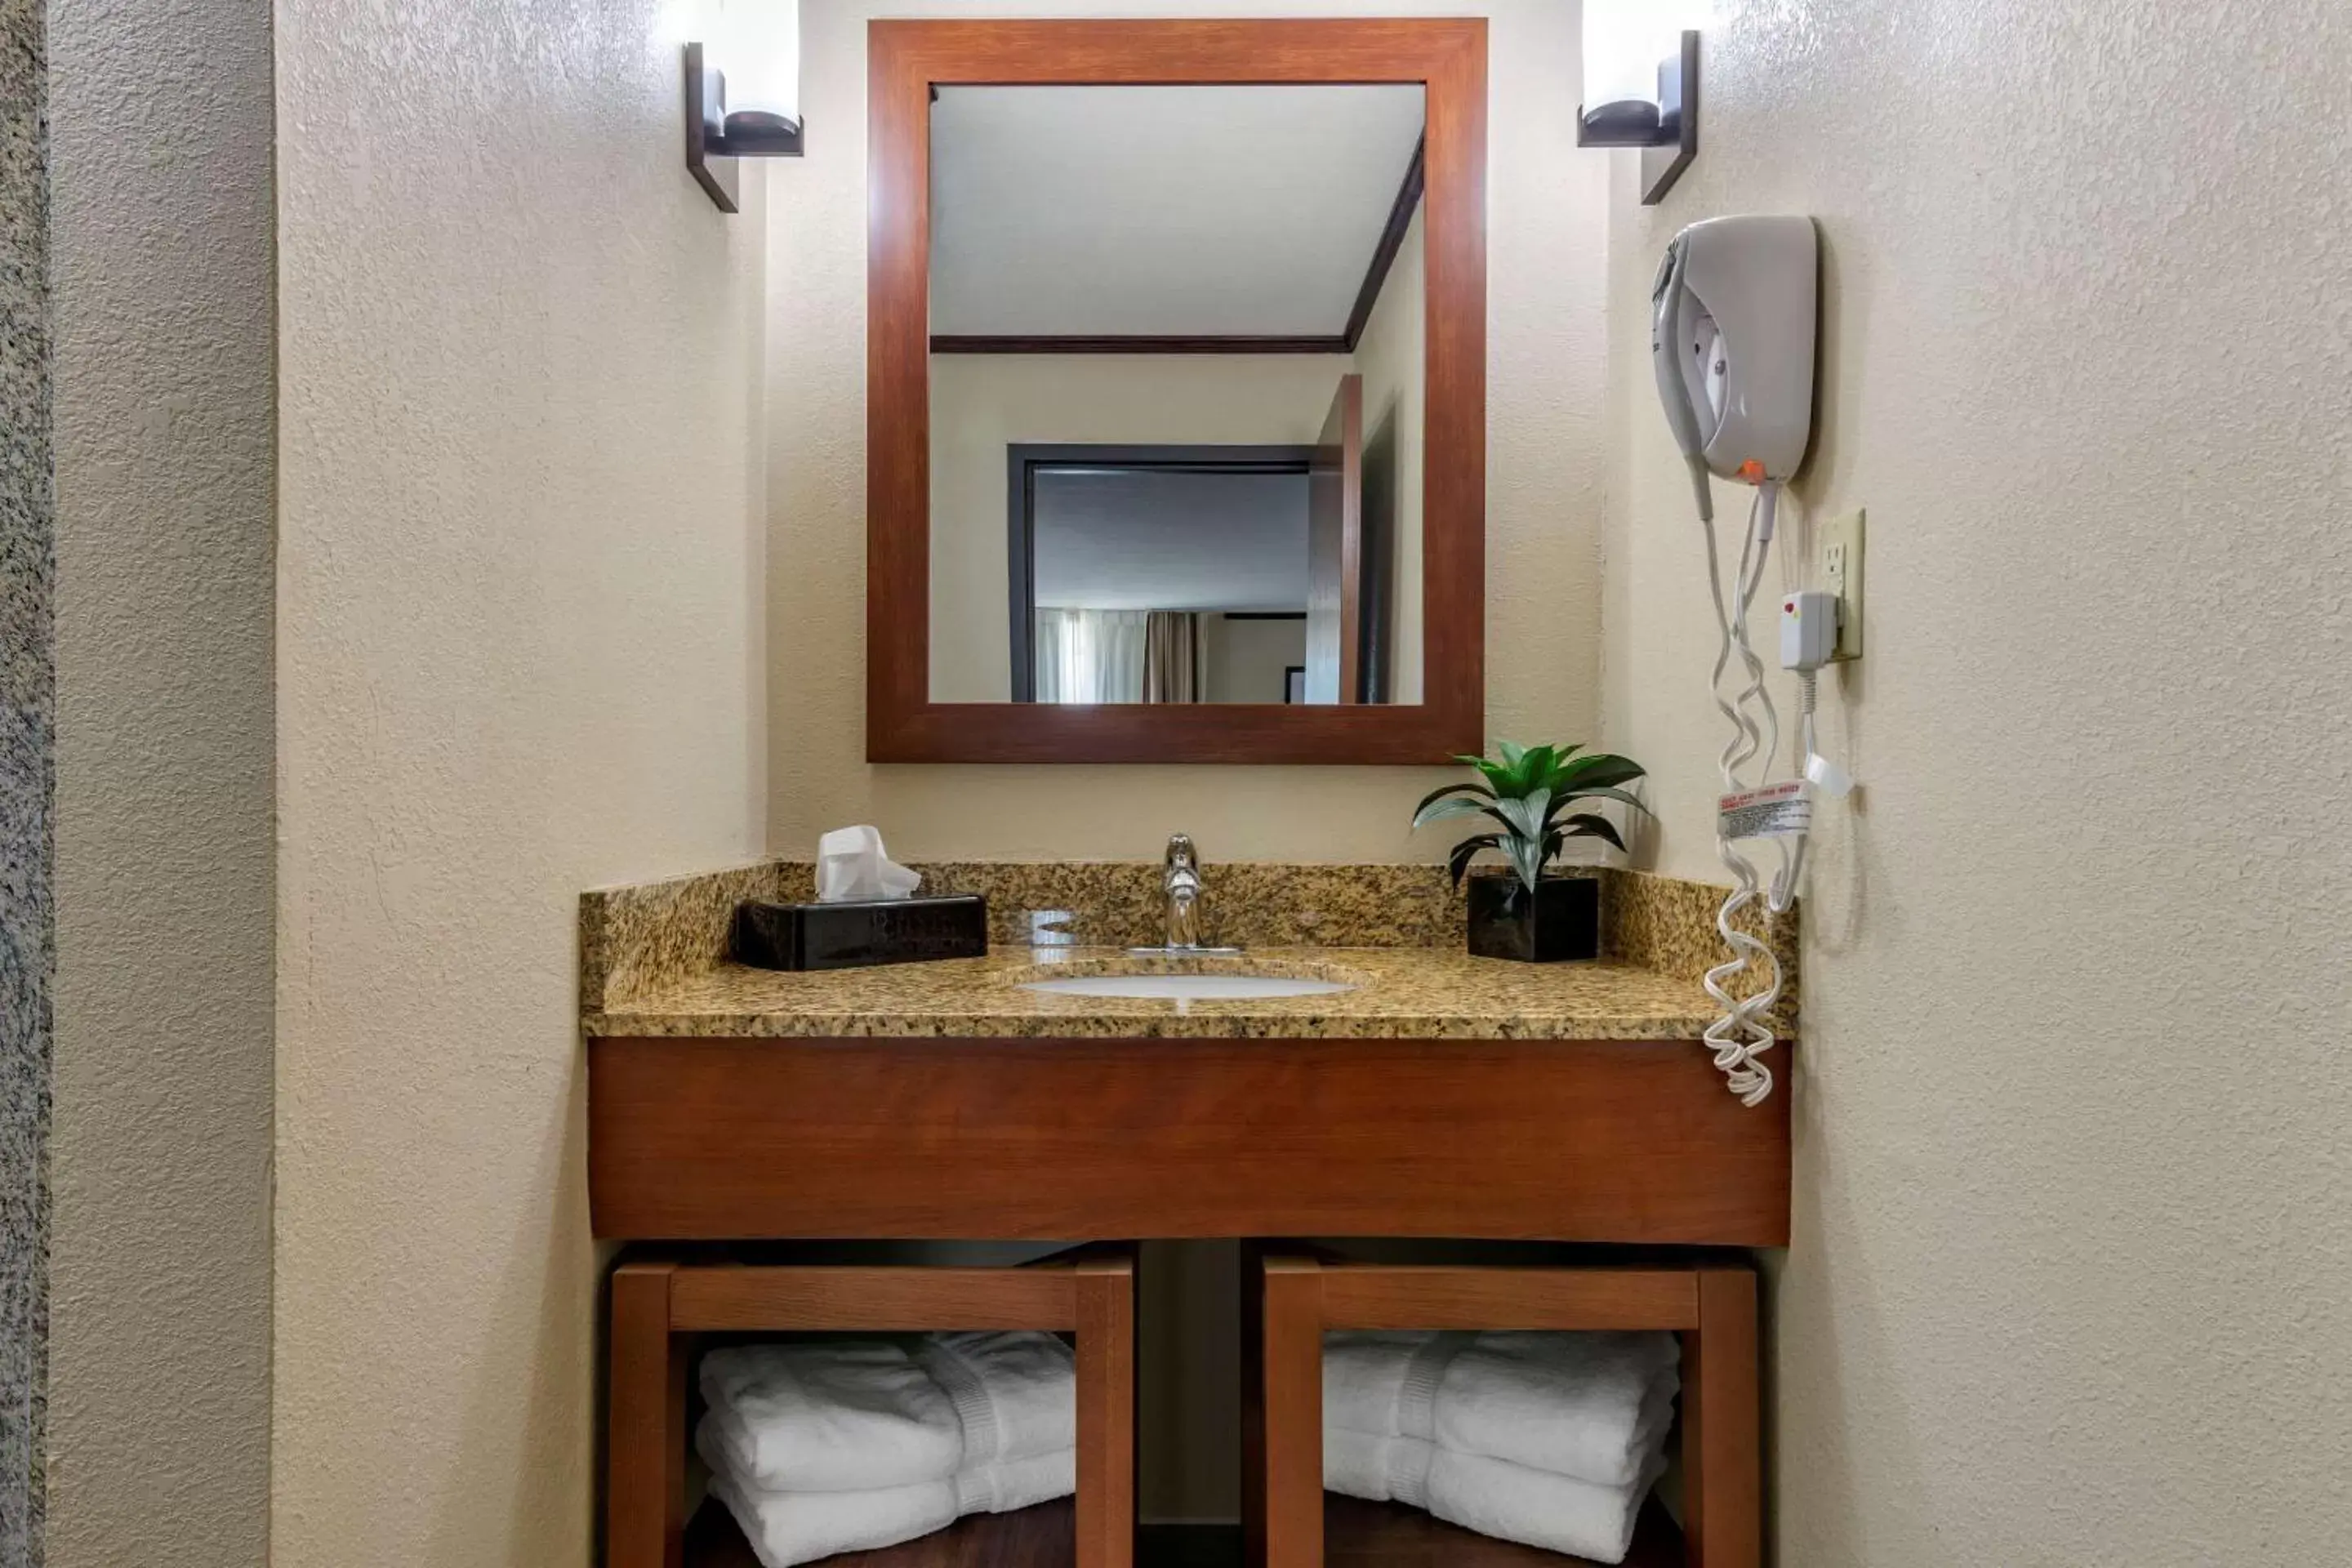 Photo of the whole room, Bathroom in Comfort Suites Manhattan